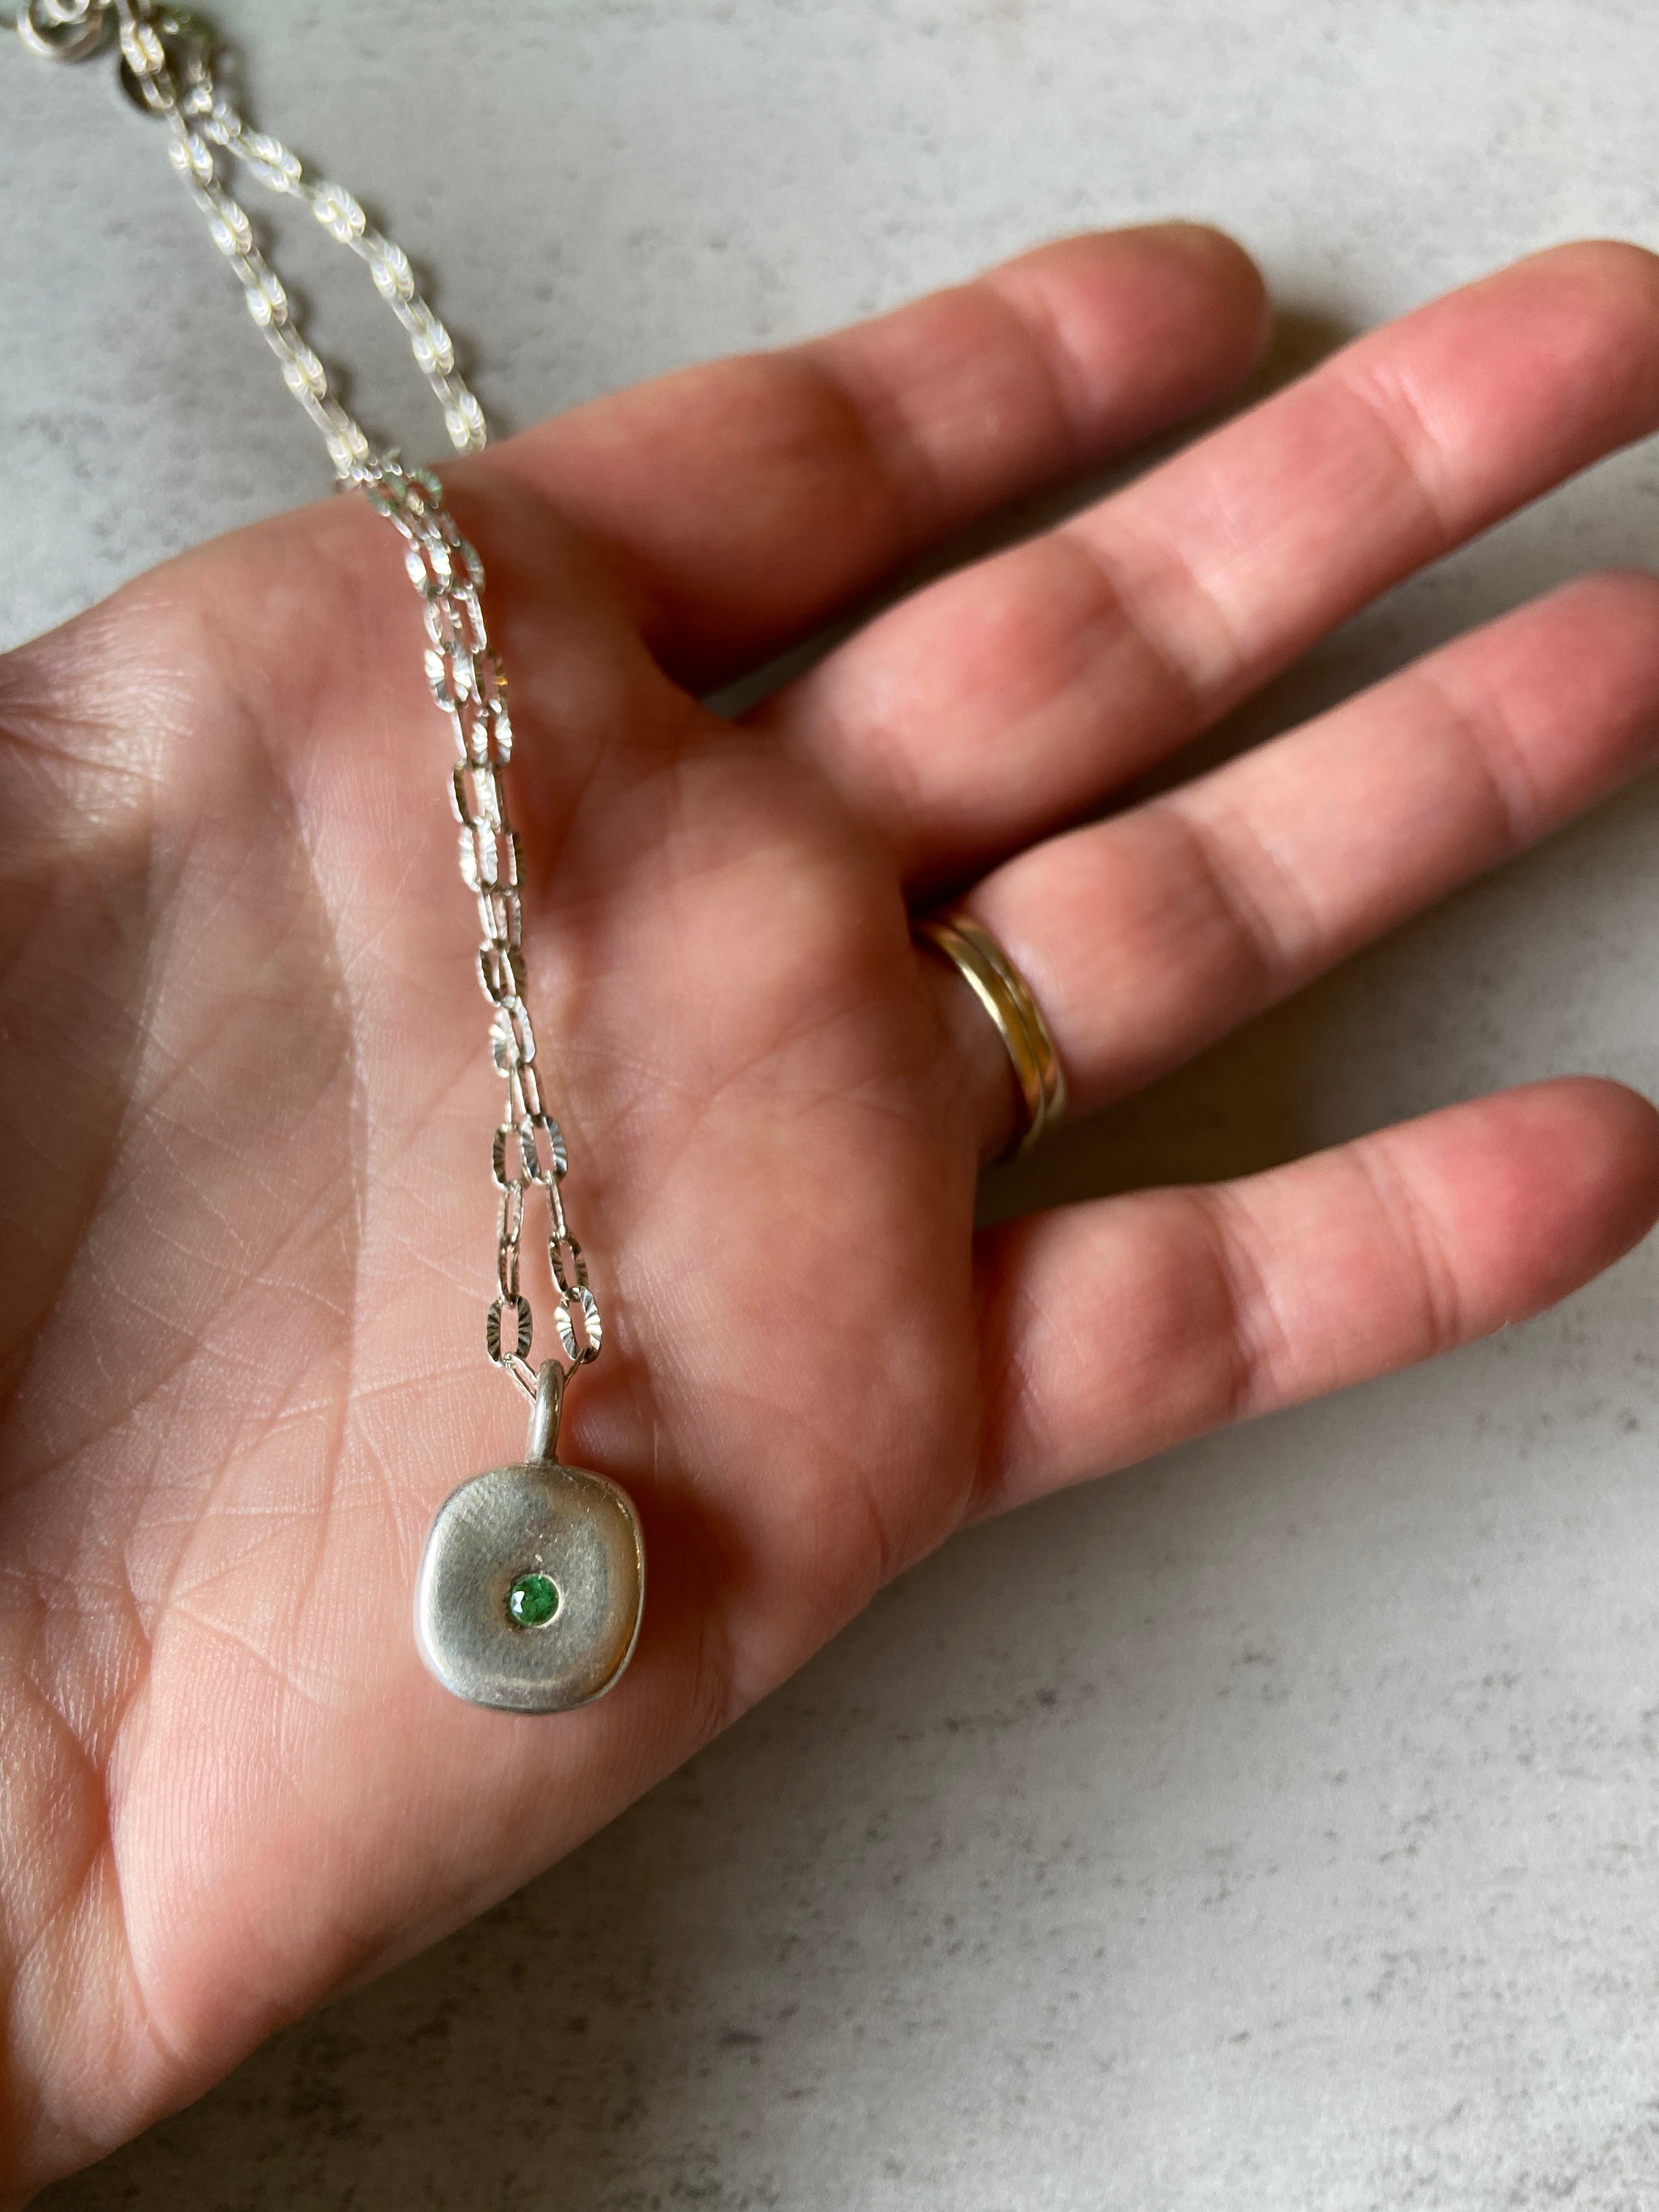 Emerald Green Tvasorite Garnet Pendant Necklaces